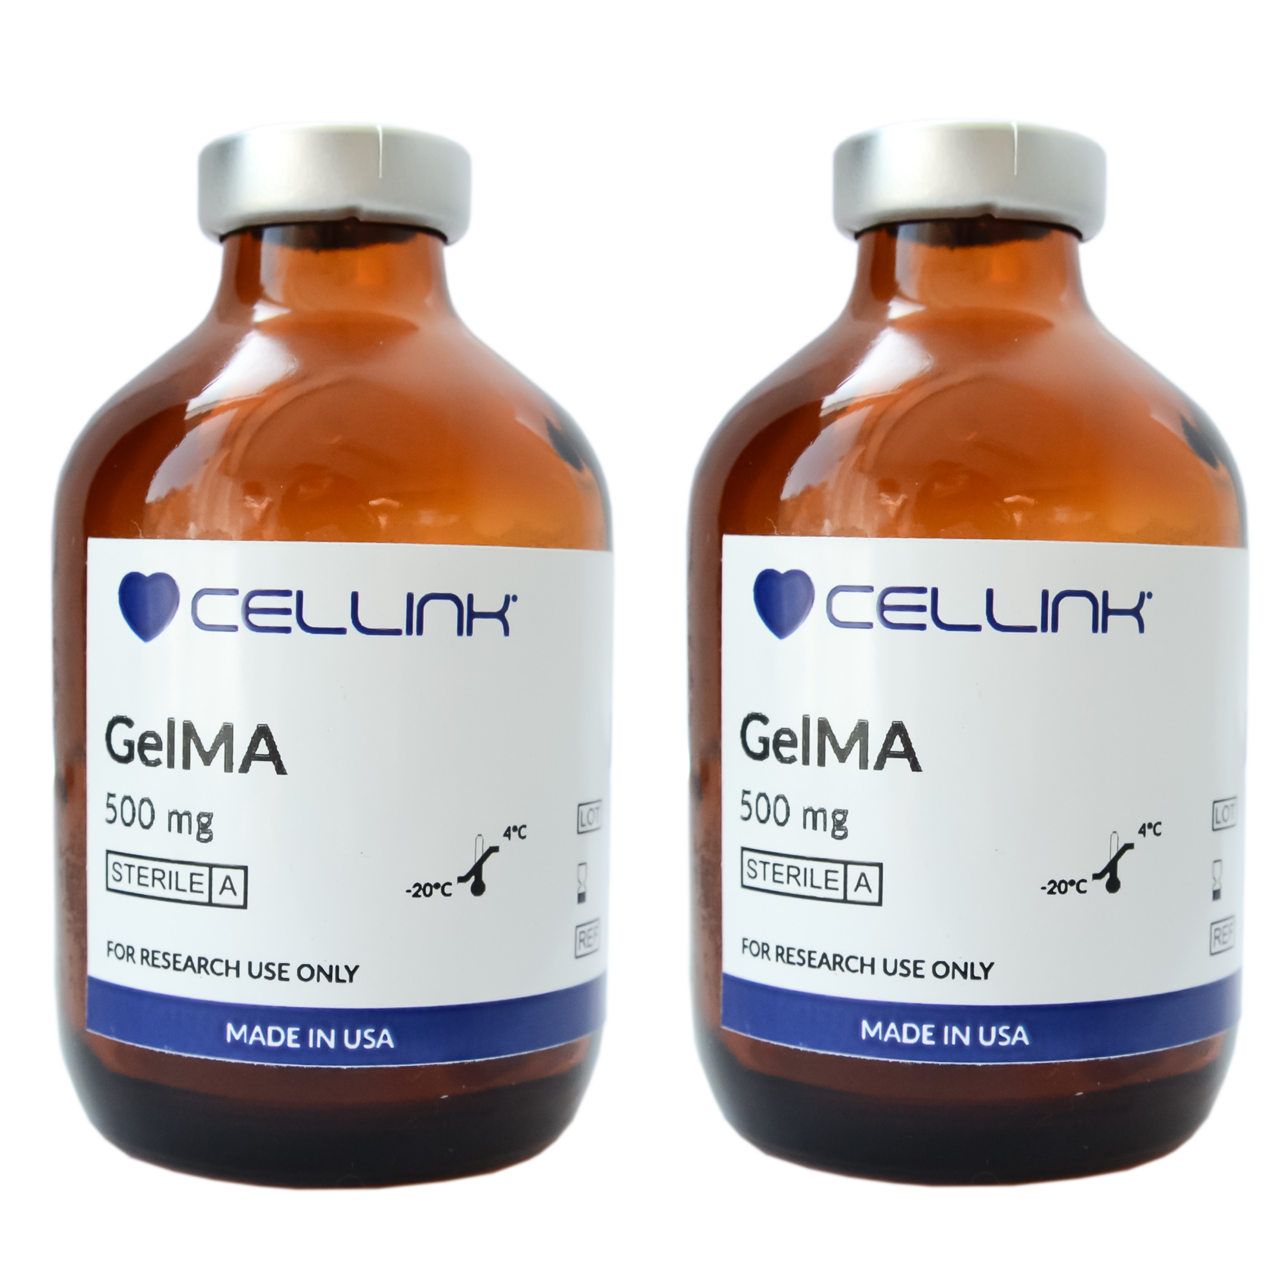 PhotoGel GelMa methacrylated Gelatin from Advanced BioMatrix